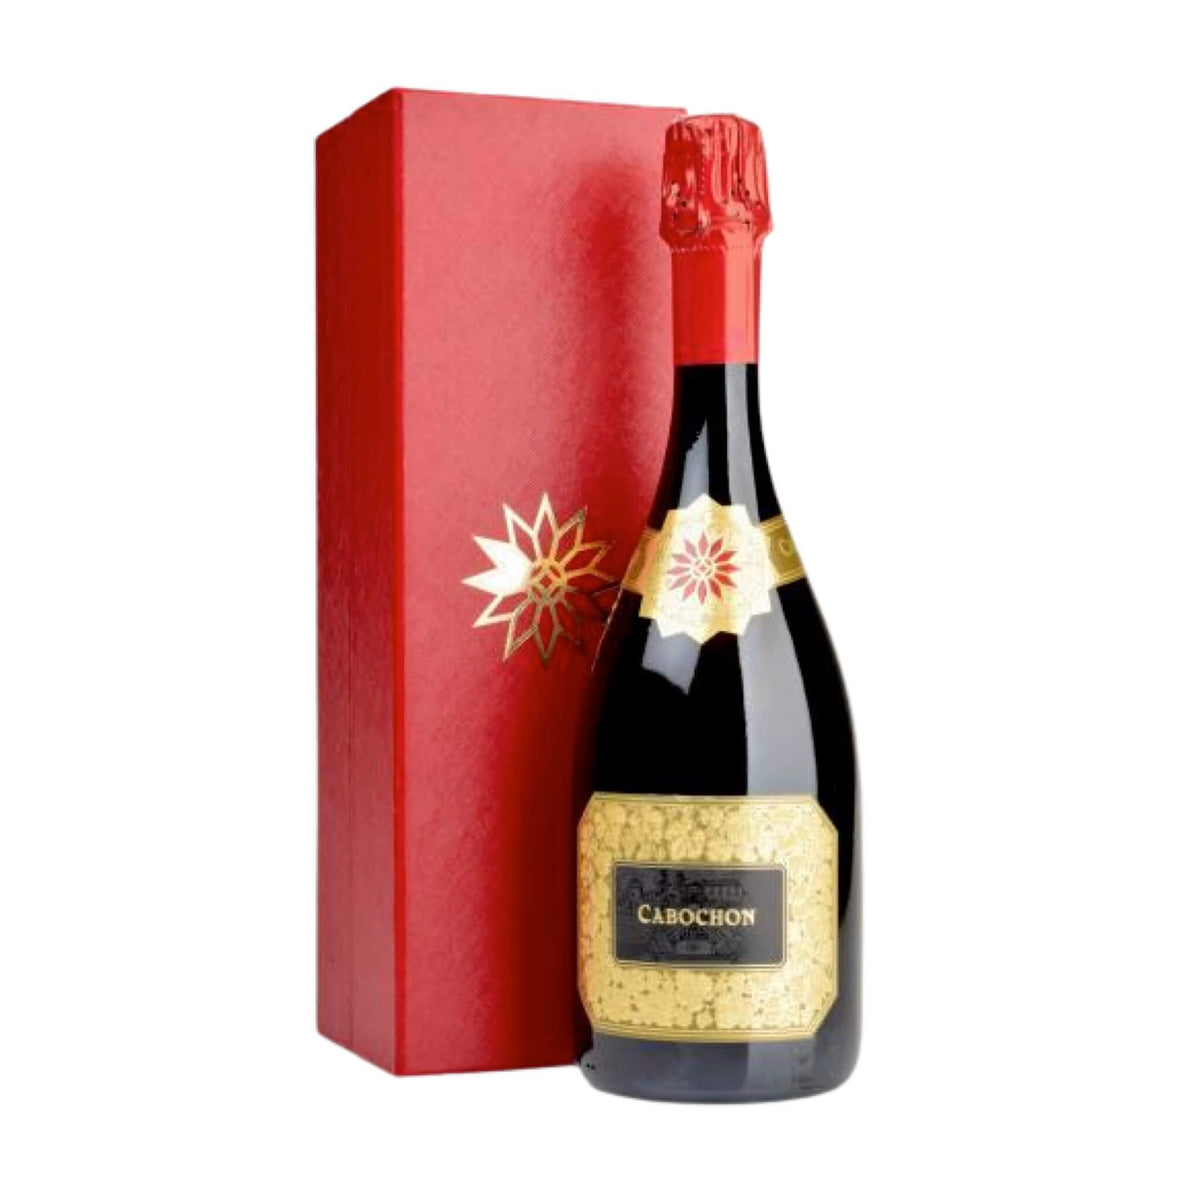 Monte Rossa-Schaumwein-Chardonnay, Pinot Noir-Cabochon Brut Reserva No 22 Franciacorta DOCG-WINECOM